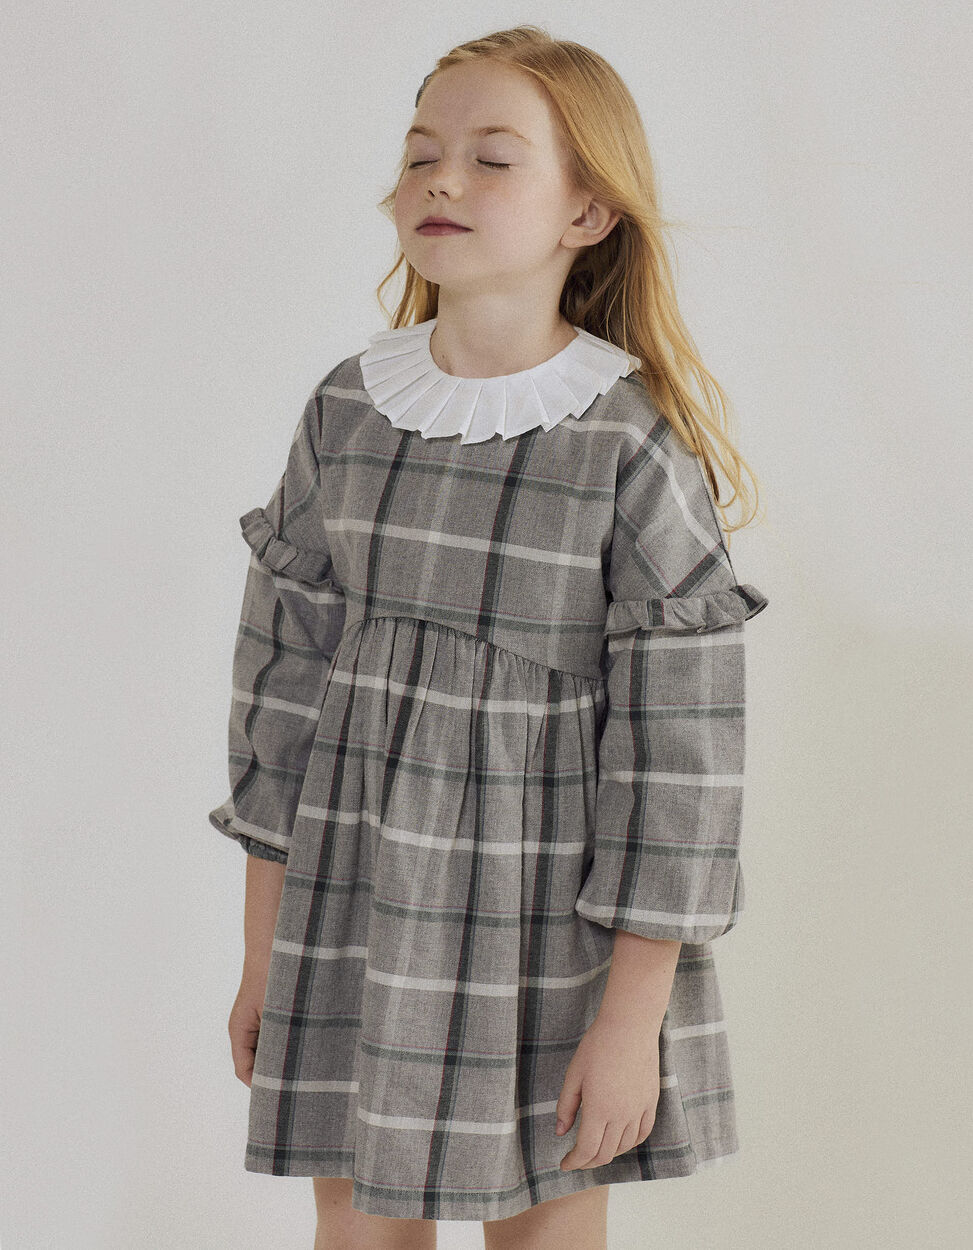 Robes pour enfant fille online